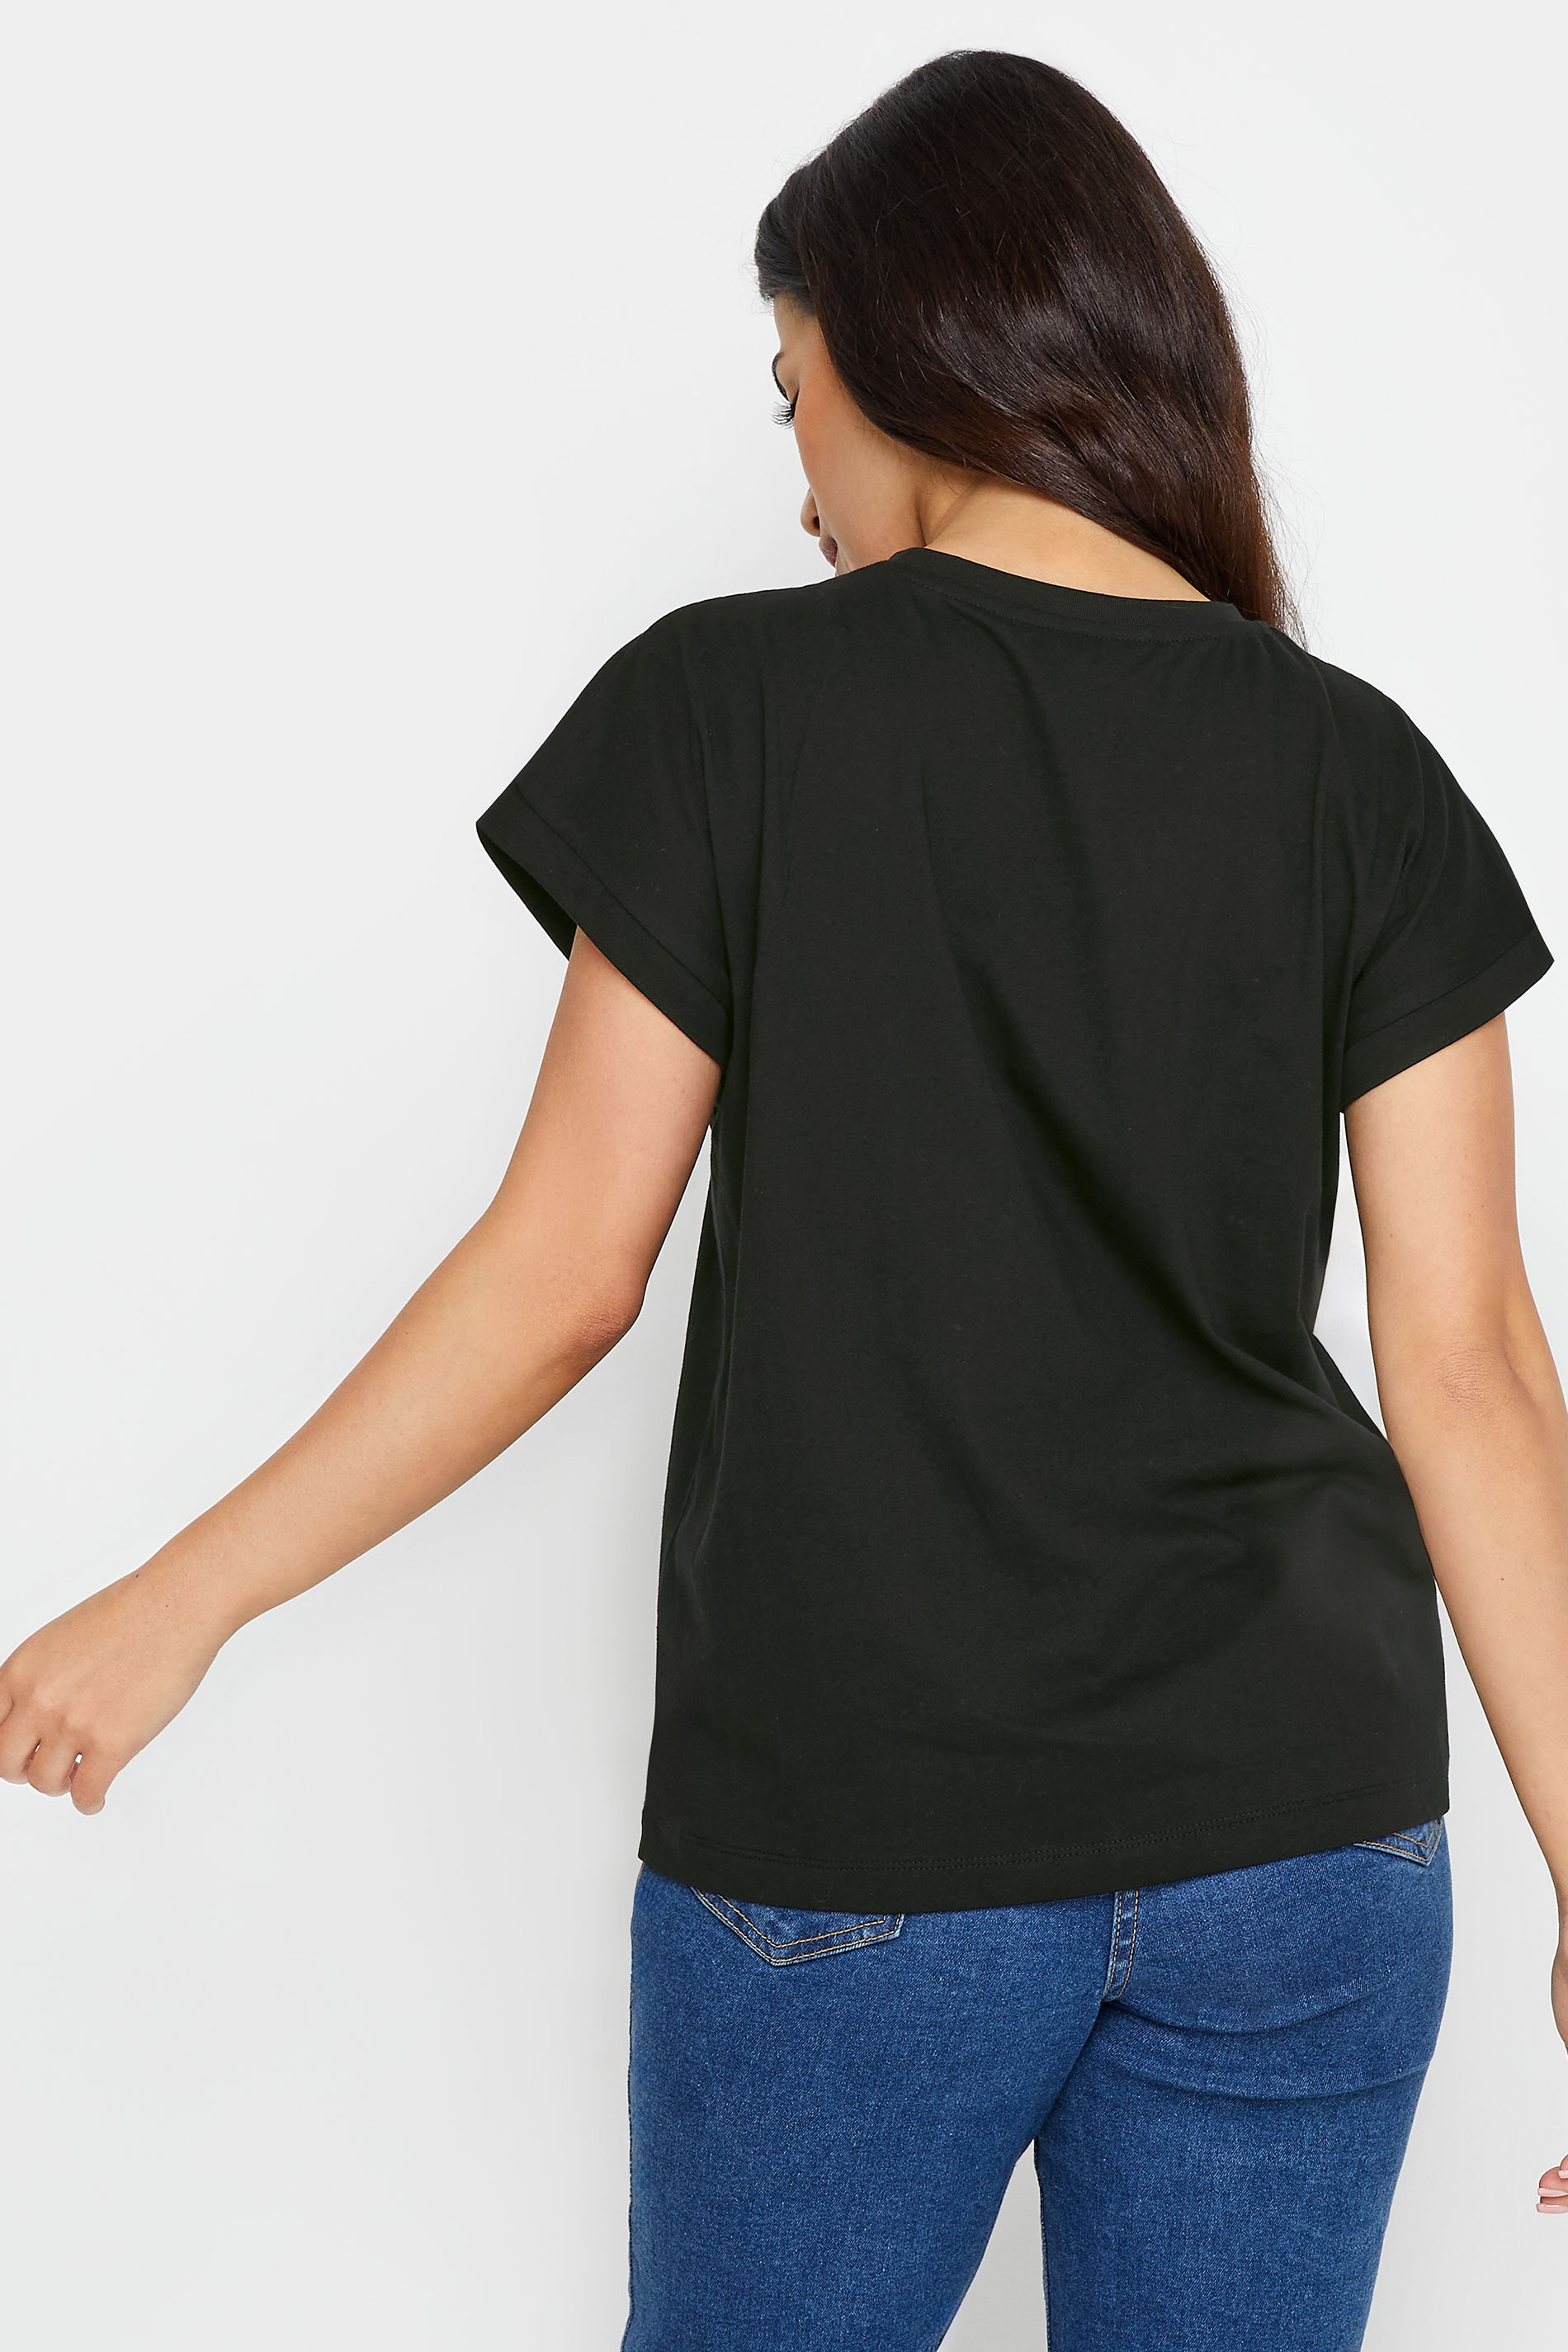 PixieGirl Petite Women's Black 'Valencia' Slogan Short Sleeve T-Shirt | PixieGirl 3